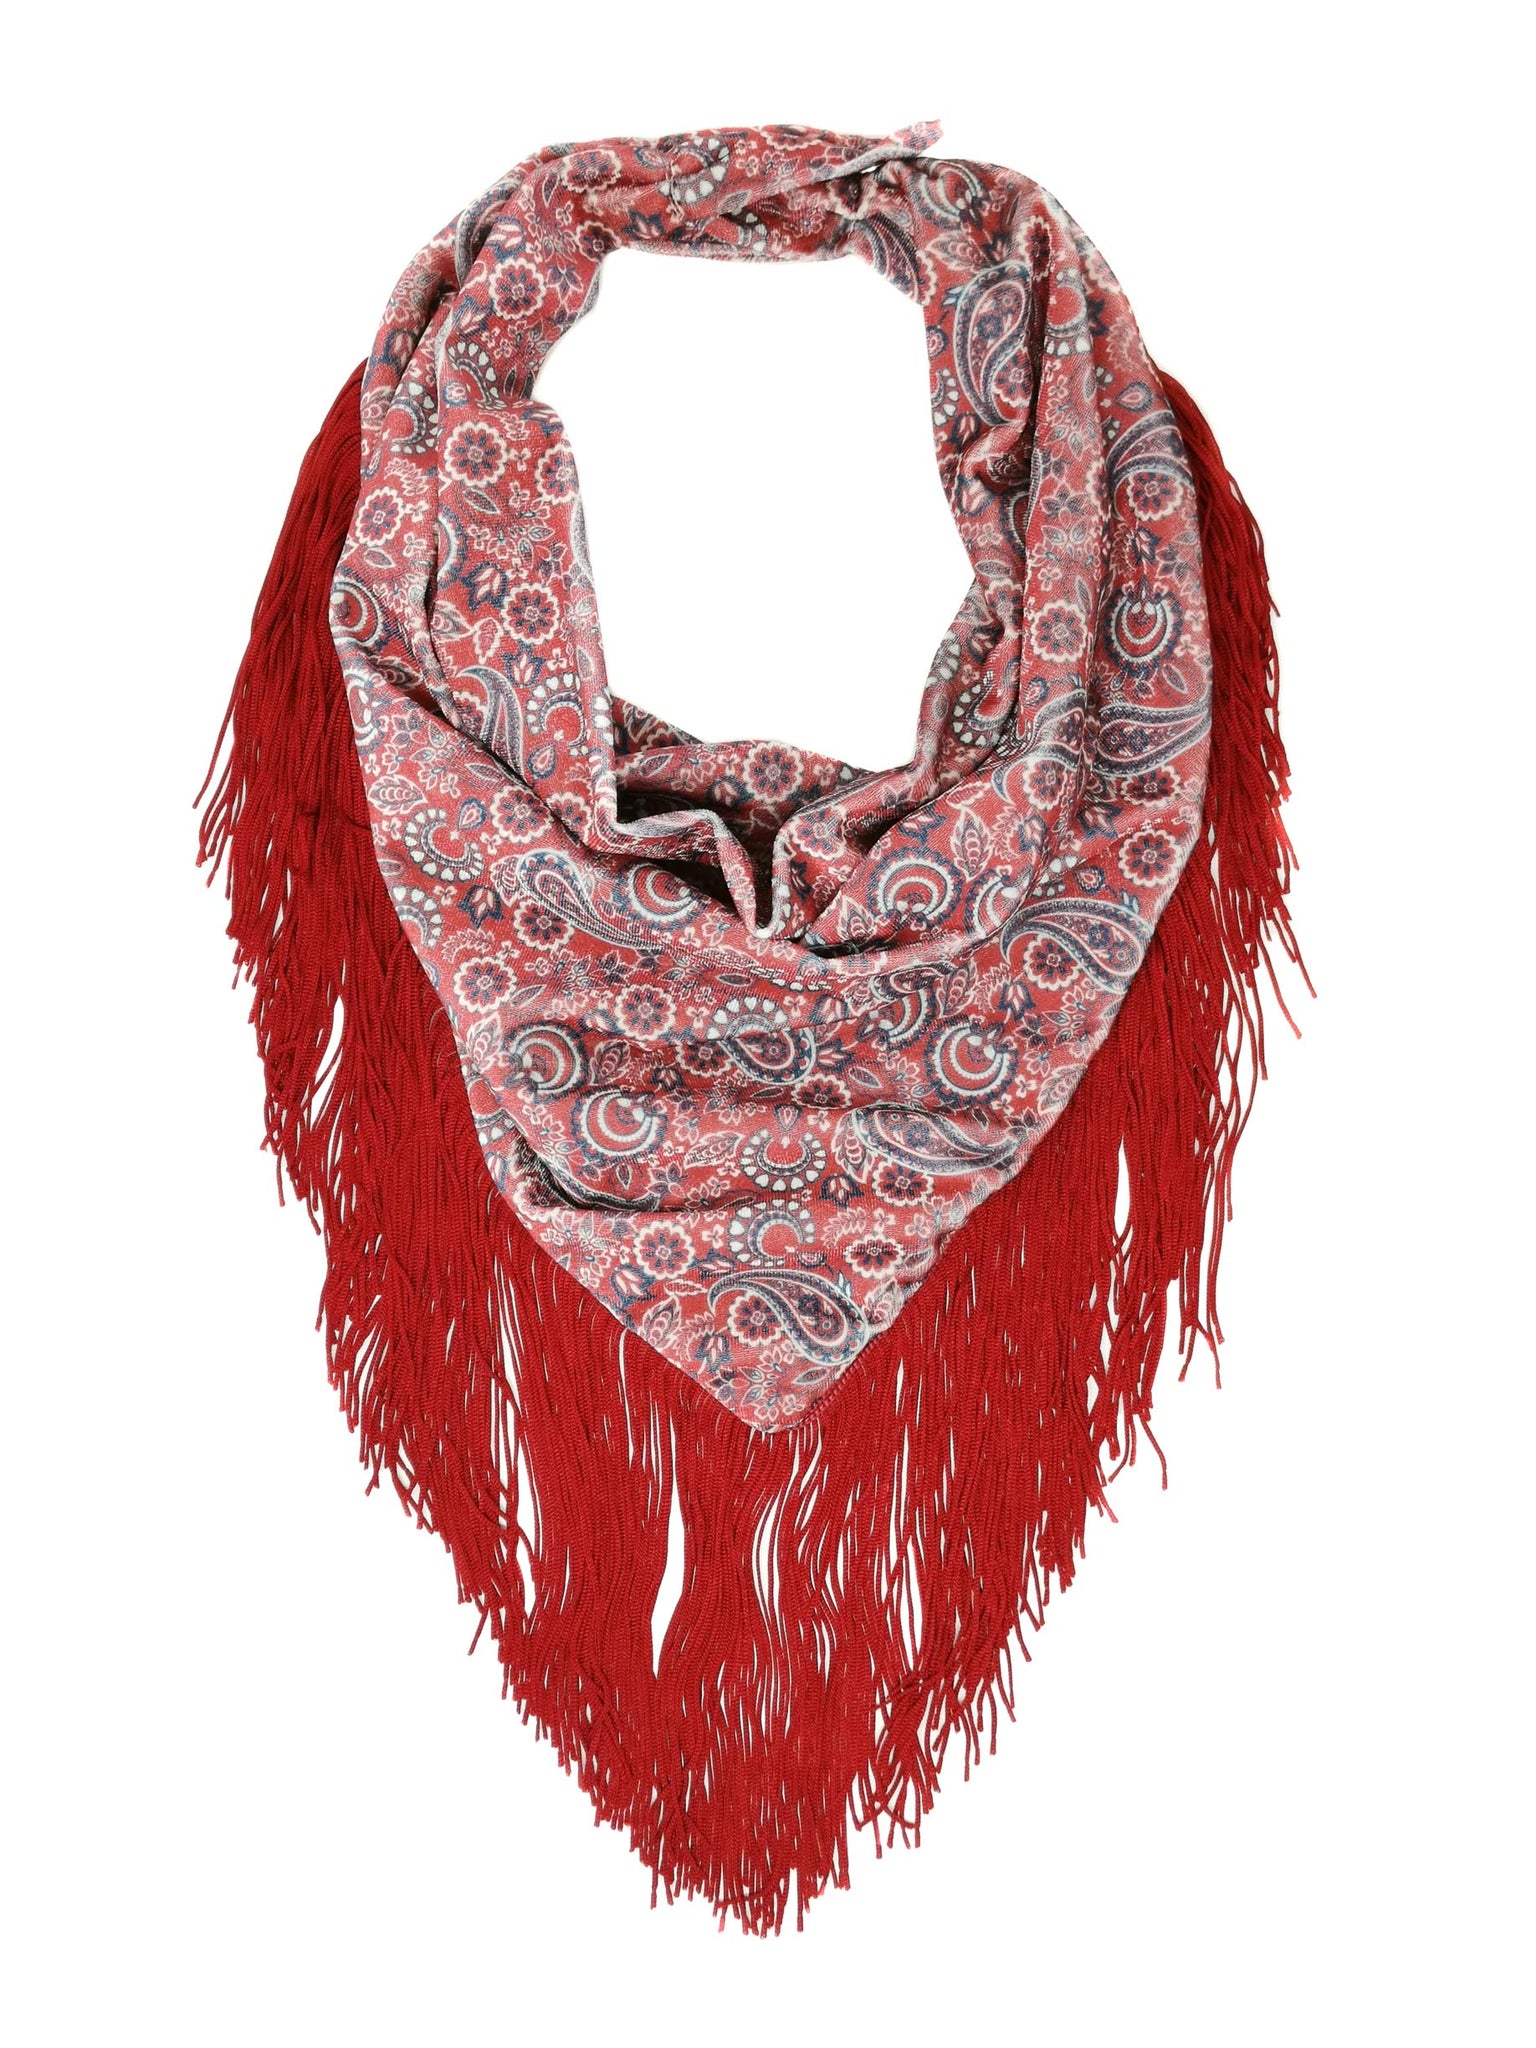 Red paisley velvet bandana with red fringes